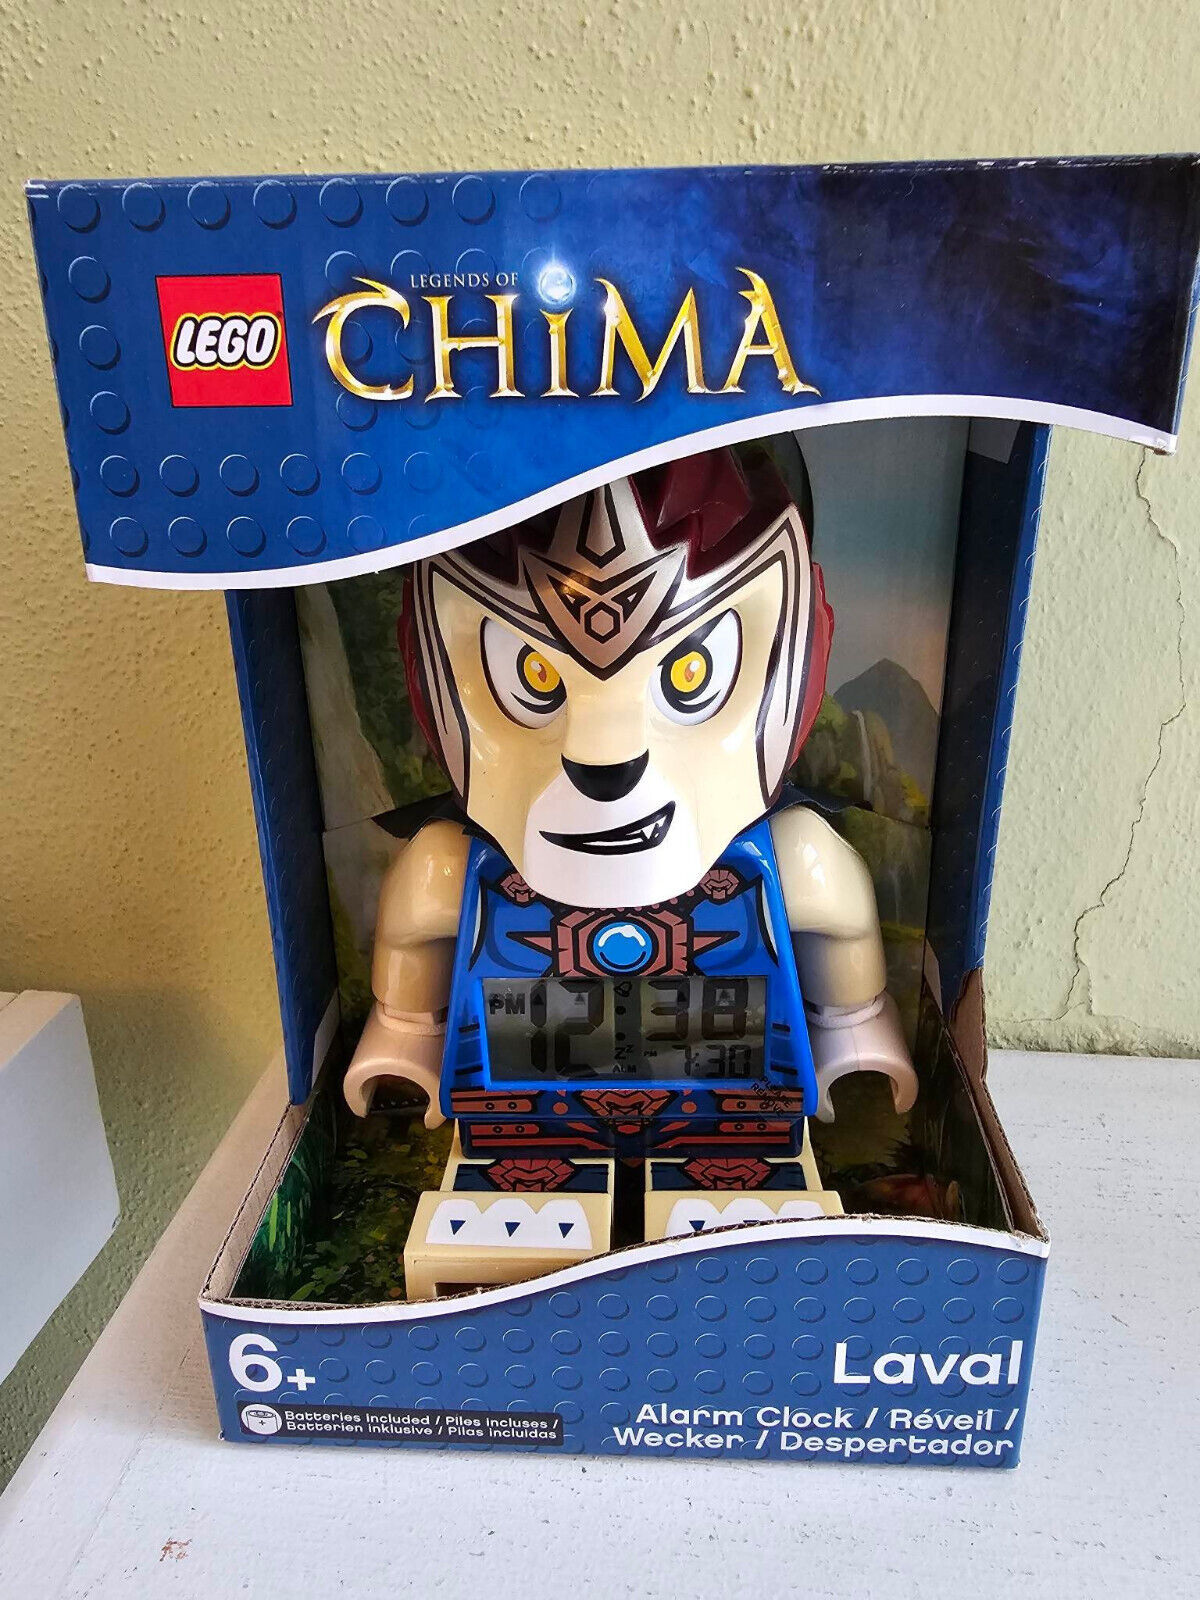 Retired 2013 LEGO Legends of Chima Laval Digital Alarm Clock -New in Box